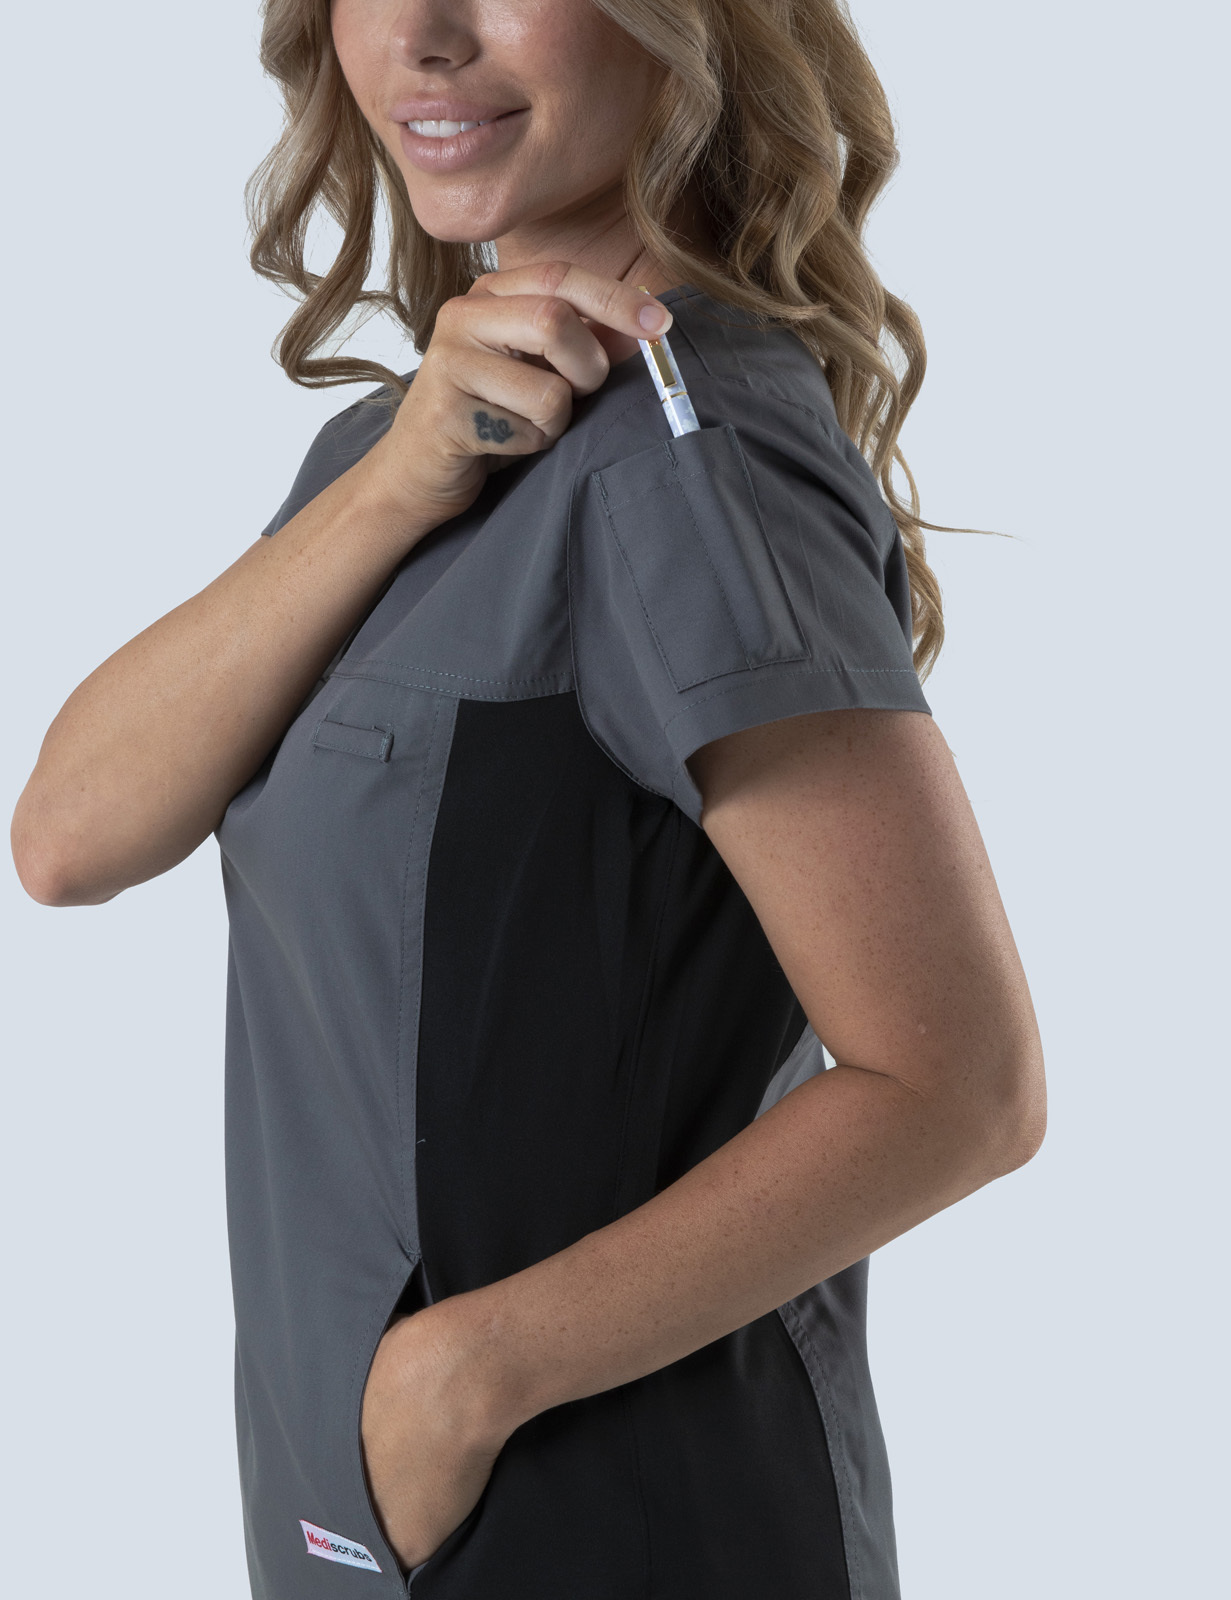 Ashmore Retreat Carer Uniform Top Only Bundle - (Women's Fit Spandex in Steel Grey incl Logo) 